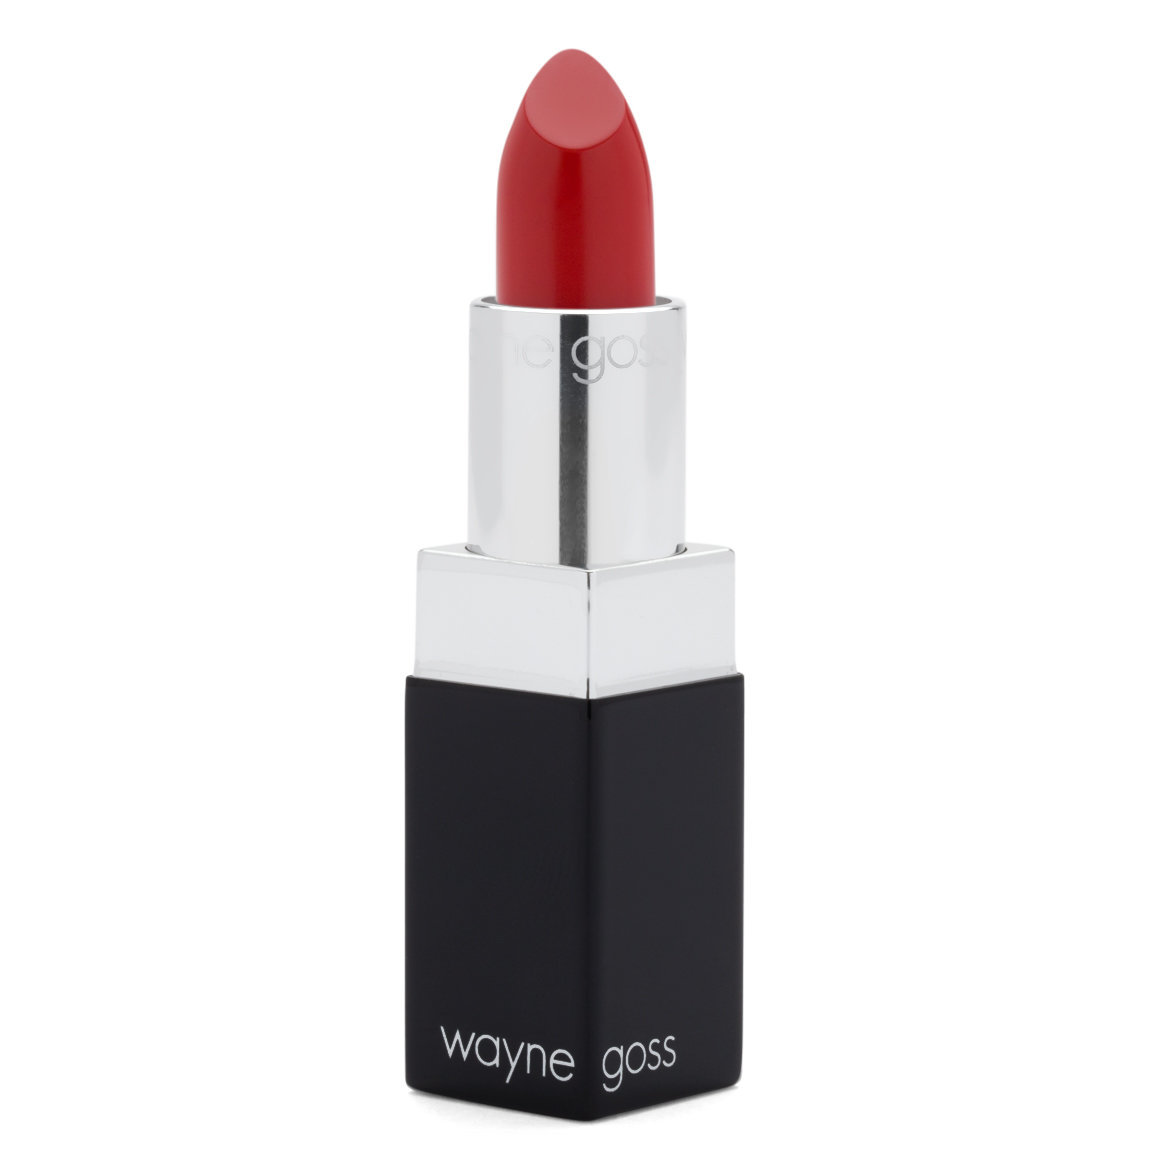 Wayne Goss The Luxury Cream Lipstick - Zinnia, Lipstick, London Loves Beauty